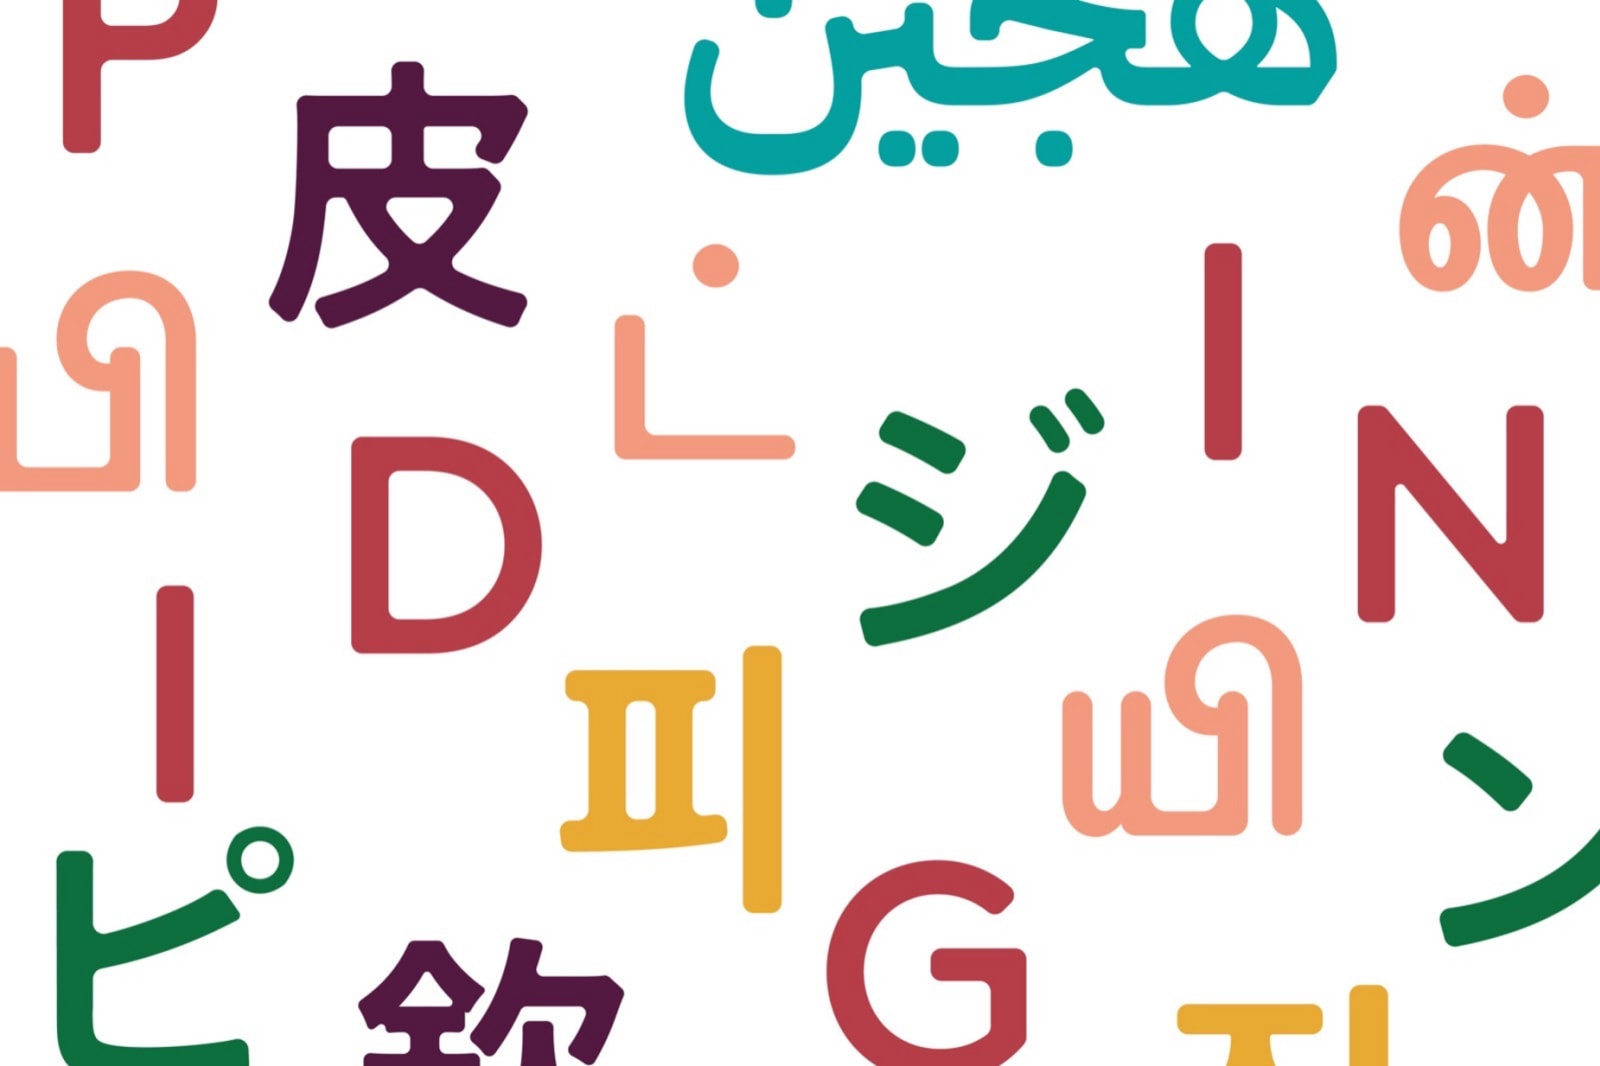 Multilingual poster saying "Pidgin"